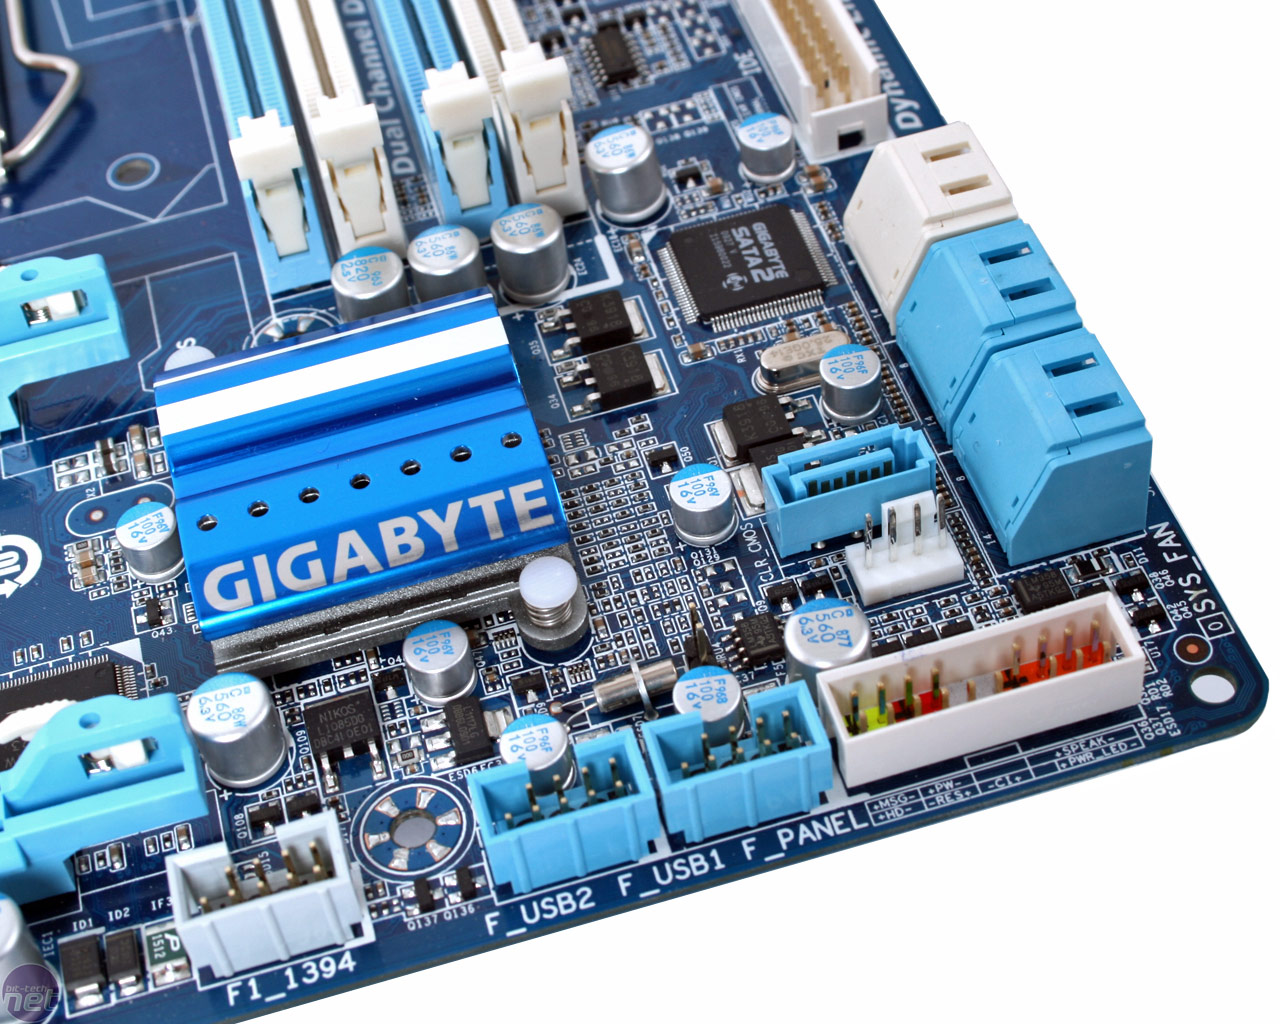 4GB DIMM Gigabyte GA-P55M-UD2 GA-P55M-UD4 GA-P55-S3 GA-P55-UD3 Ram Memory